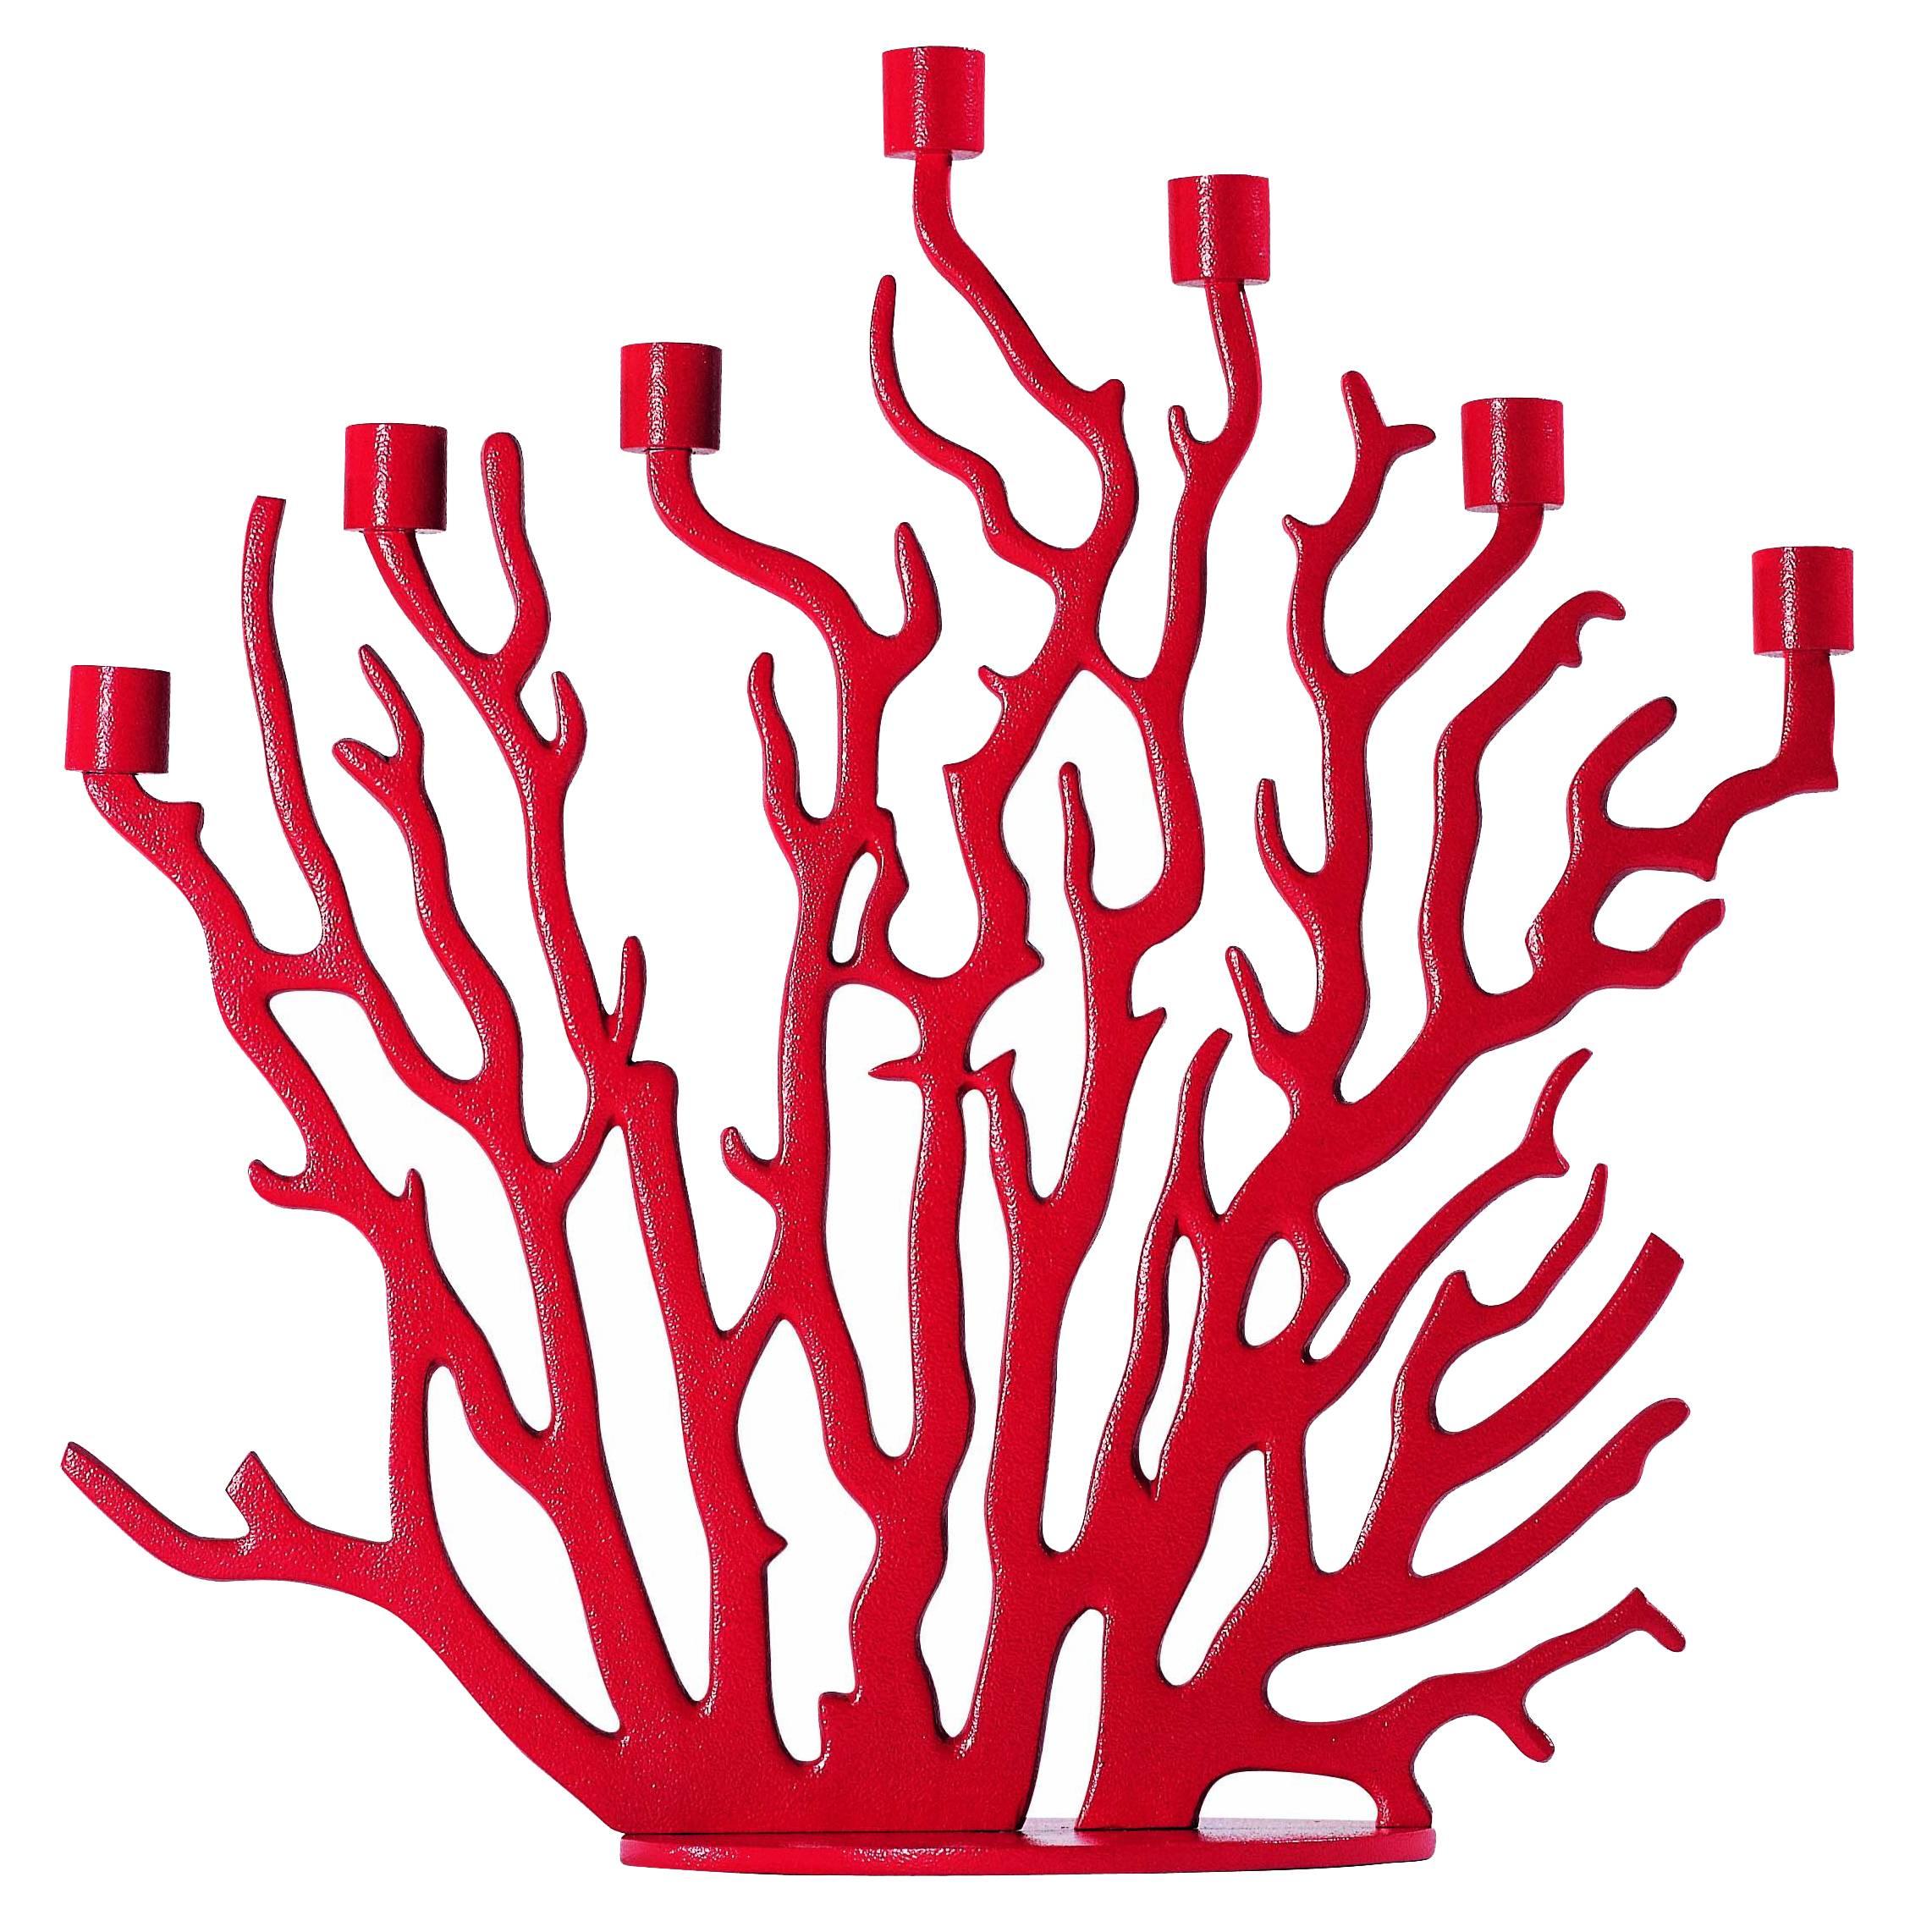 Tenochititlan Large Red Cast Aluminium Candleholder by Laudani & Romanelli For Sale